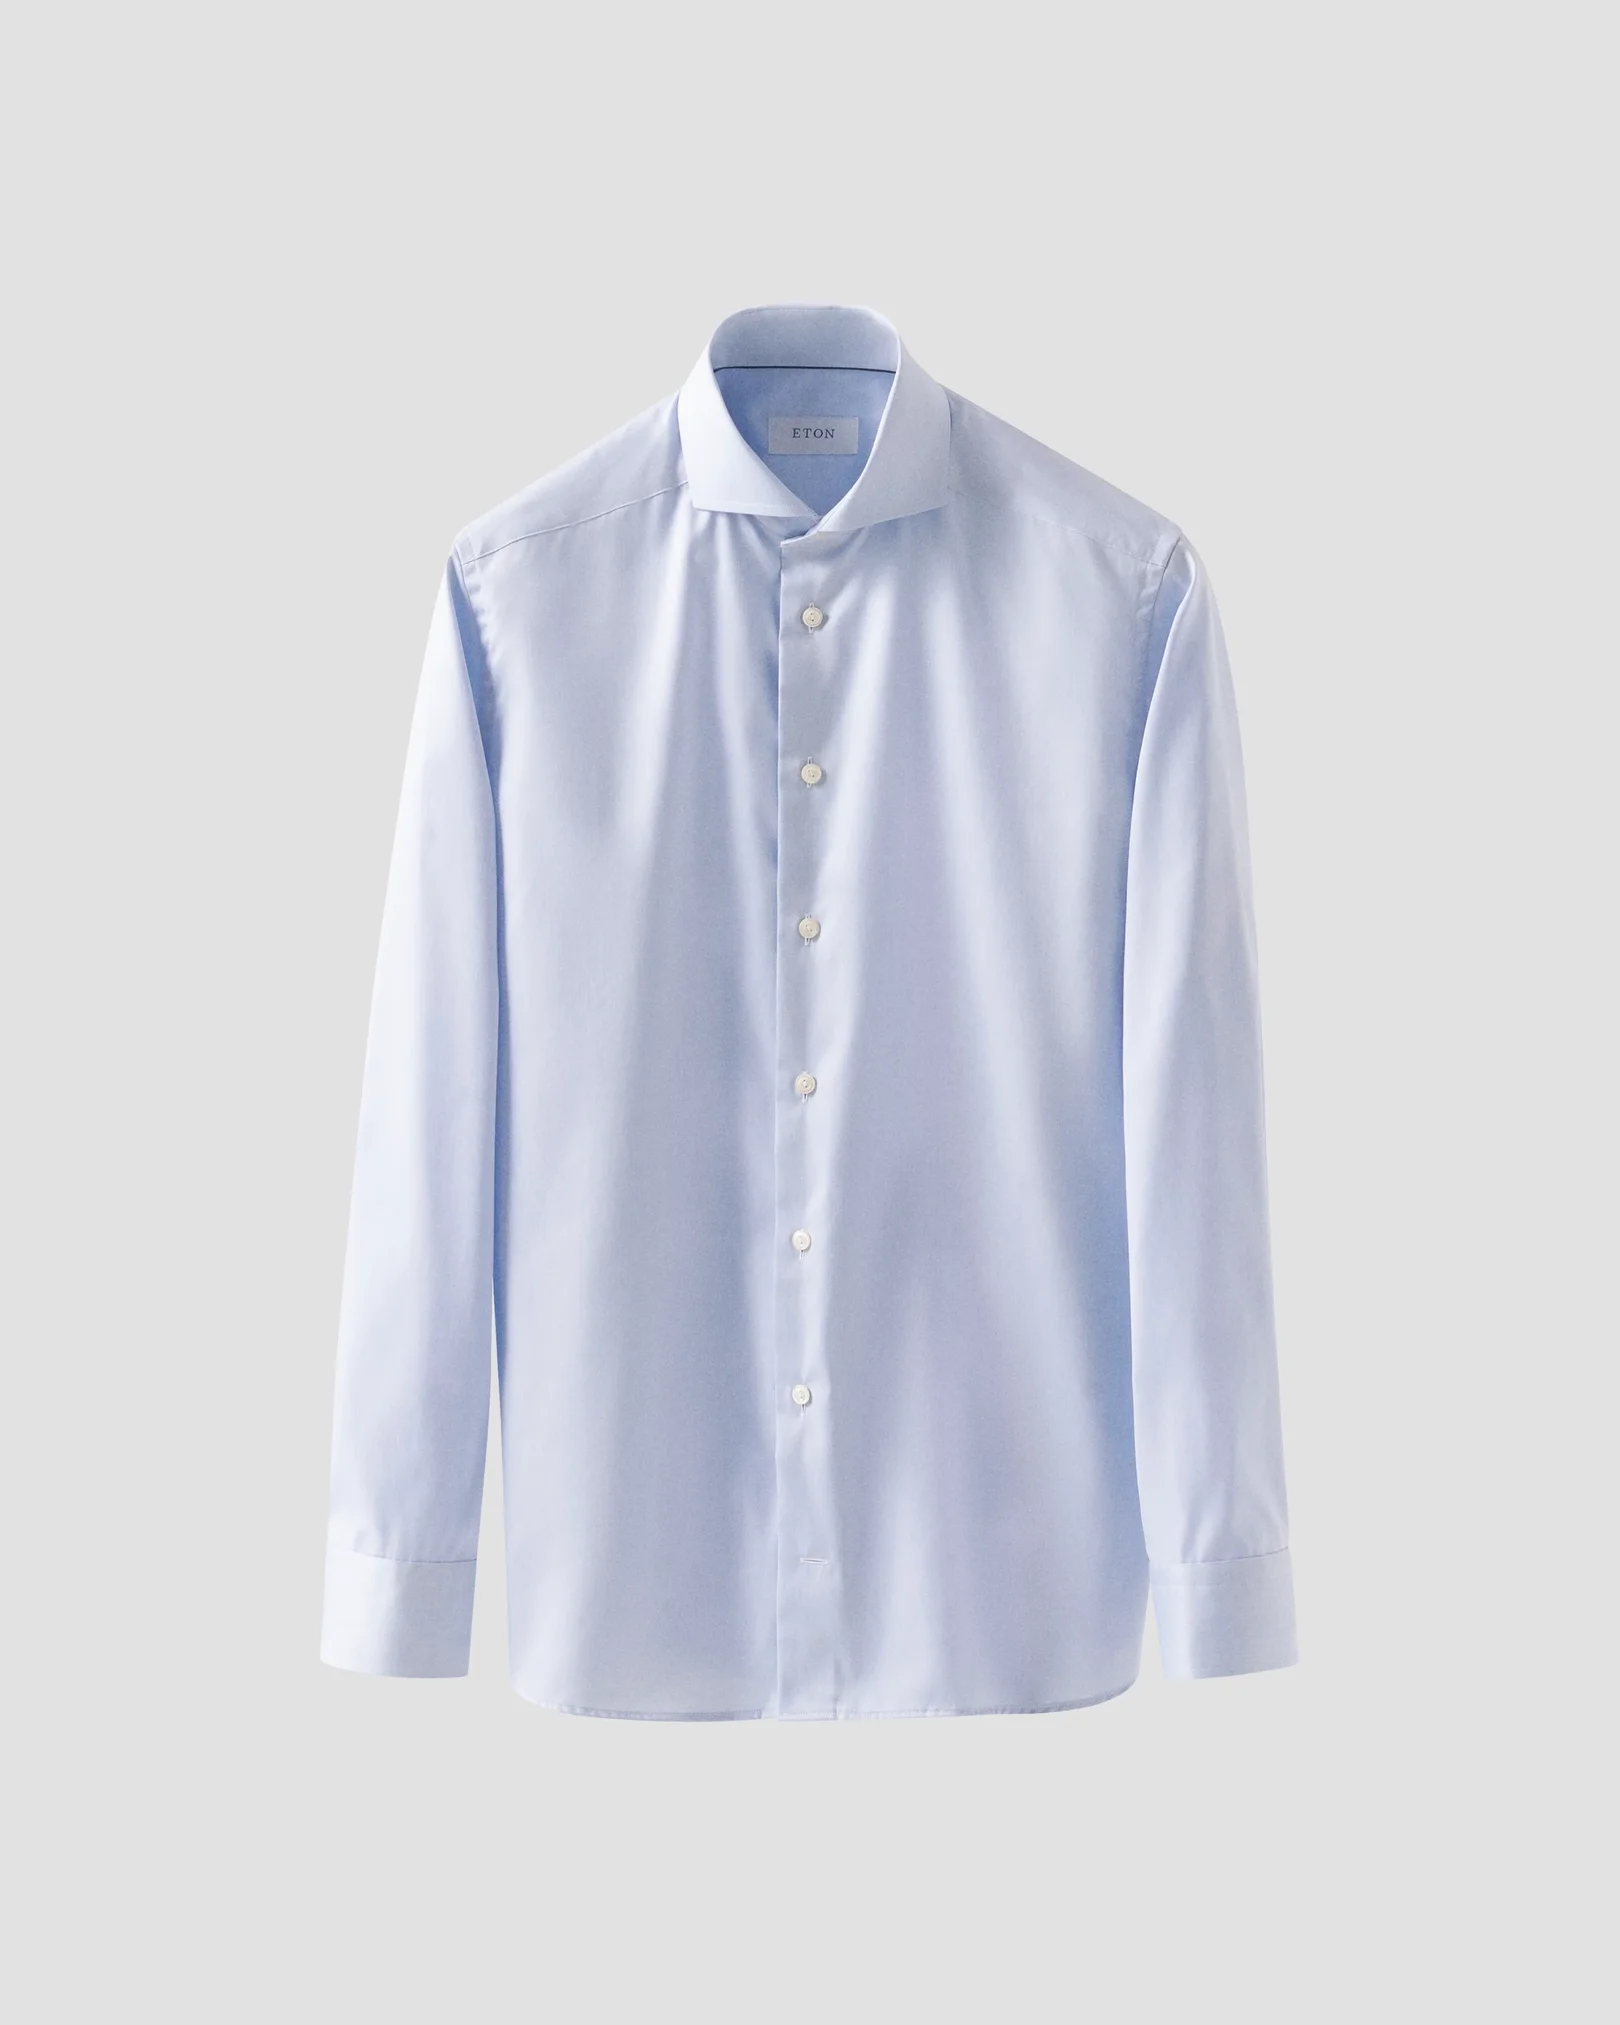 Eton - Light Blue Signature Twill Shirt - Extreme Cut Away